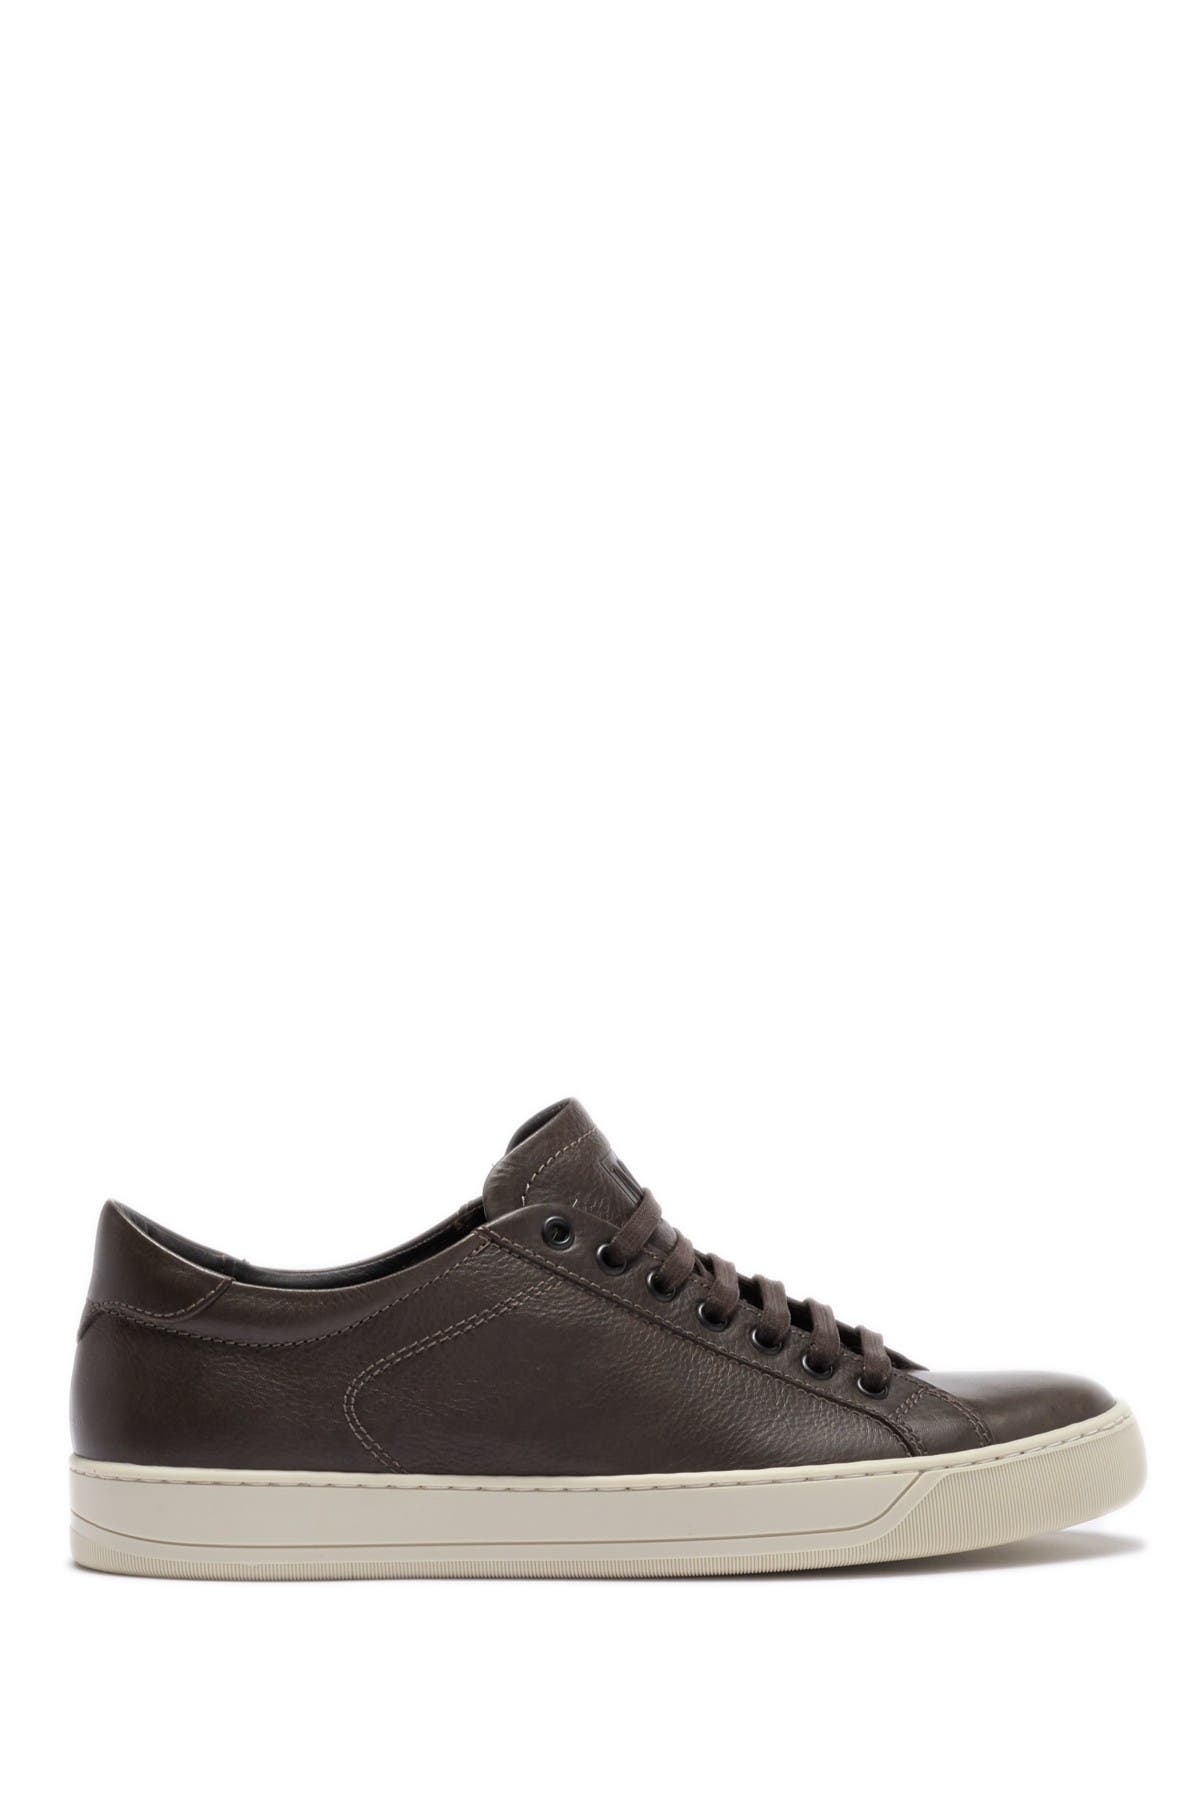 bruno magli westy ii leather sneaker